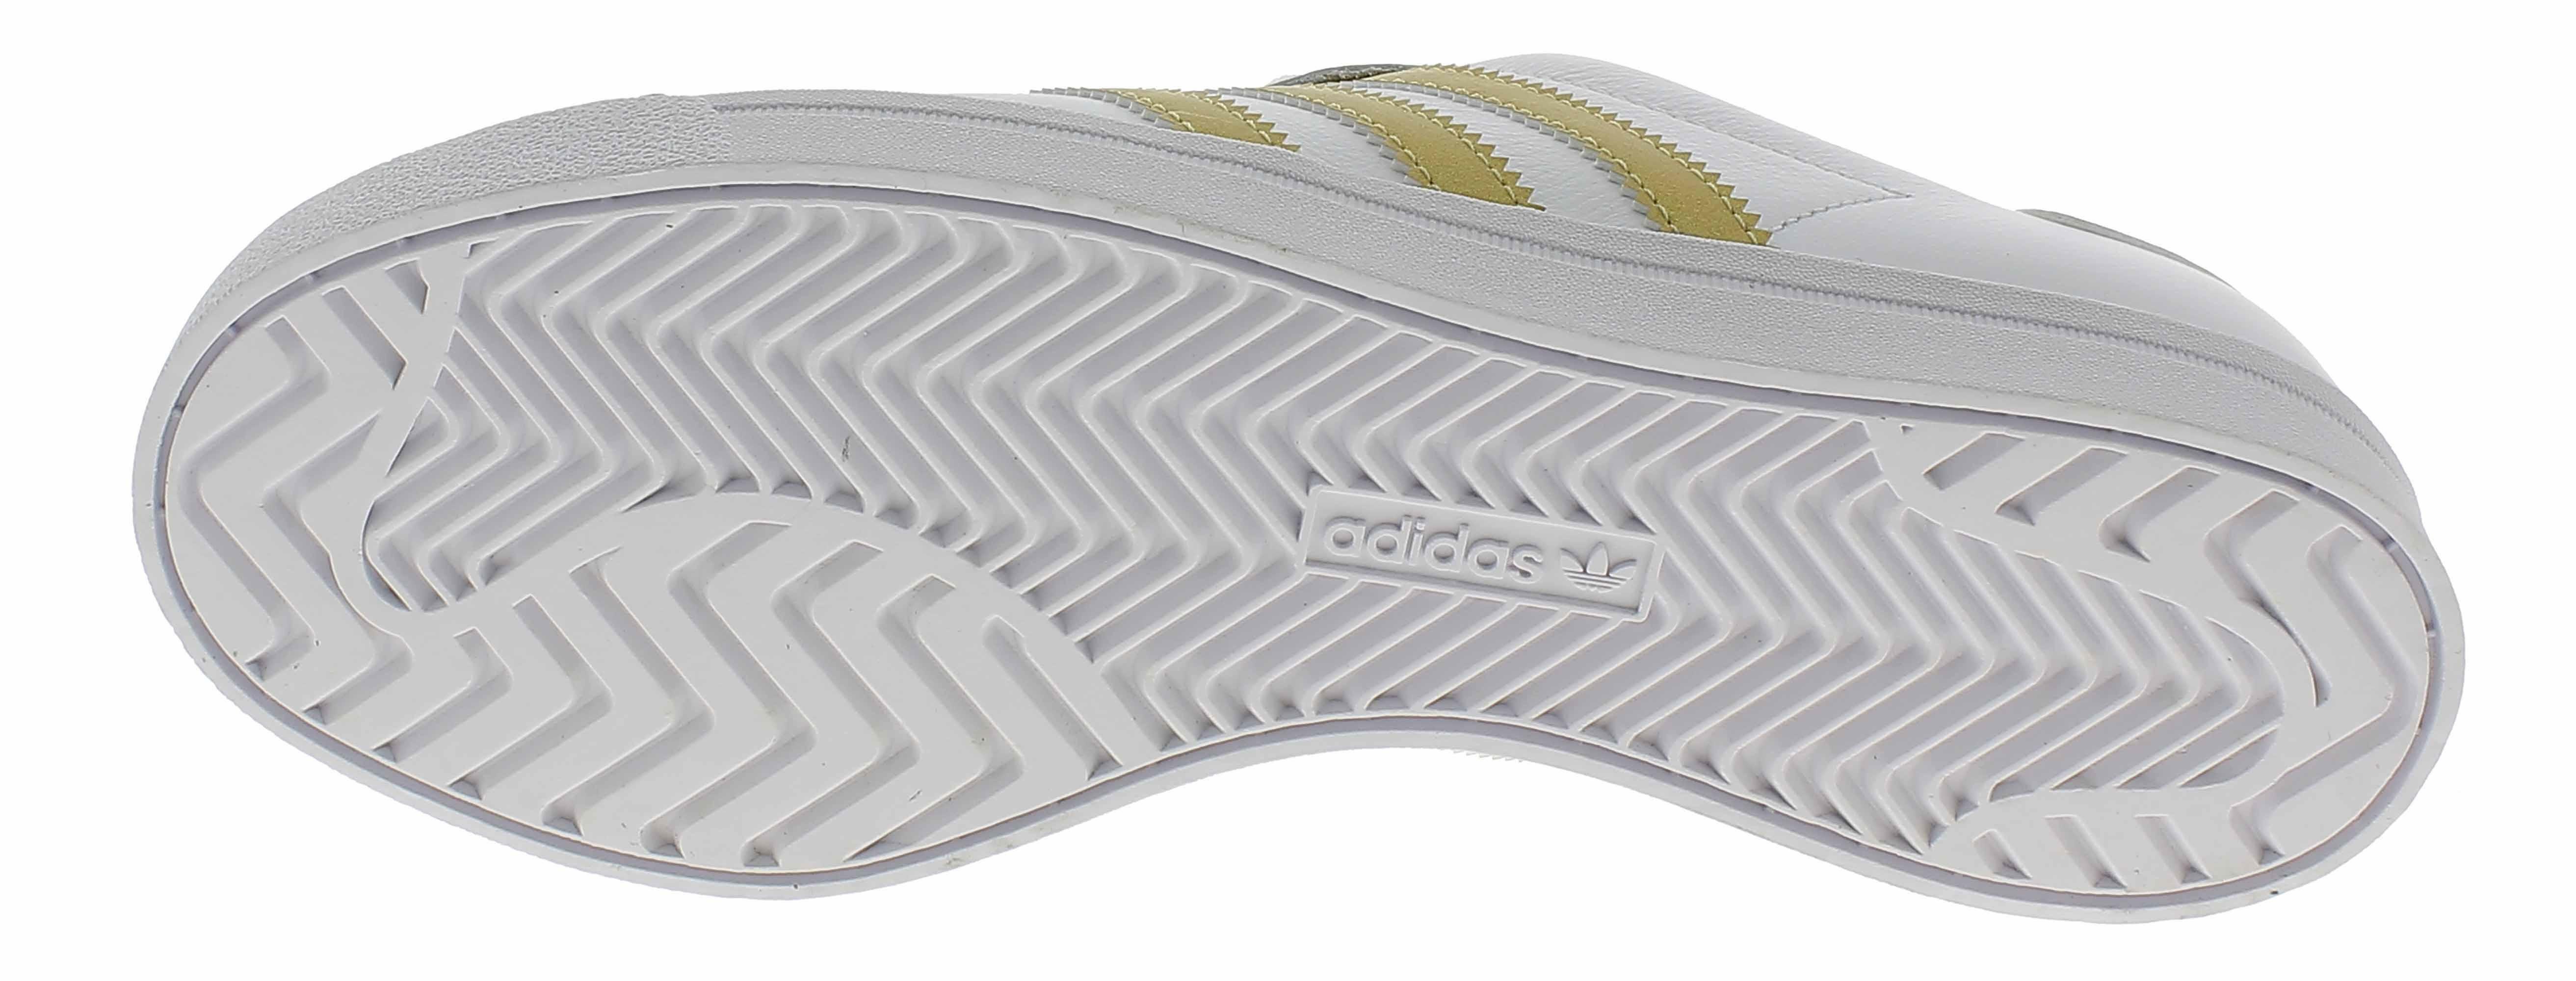 adidas adidas coast star w scarpe sportive donna bianche ee6200